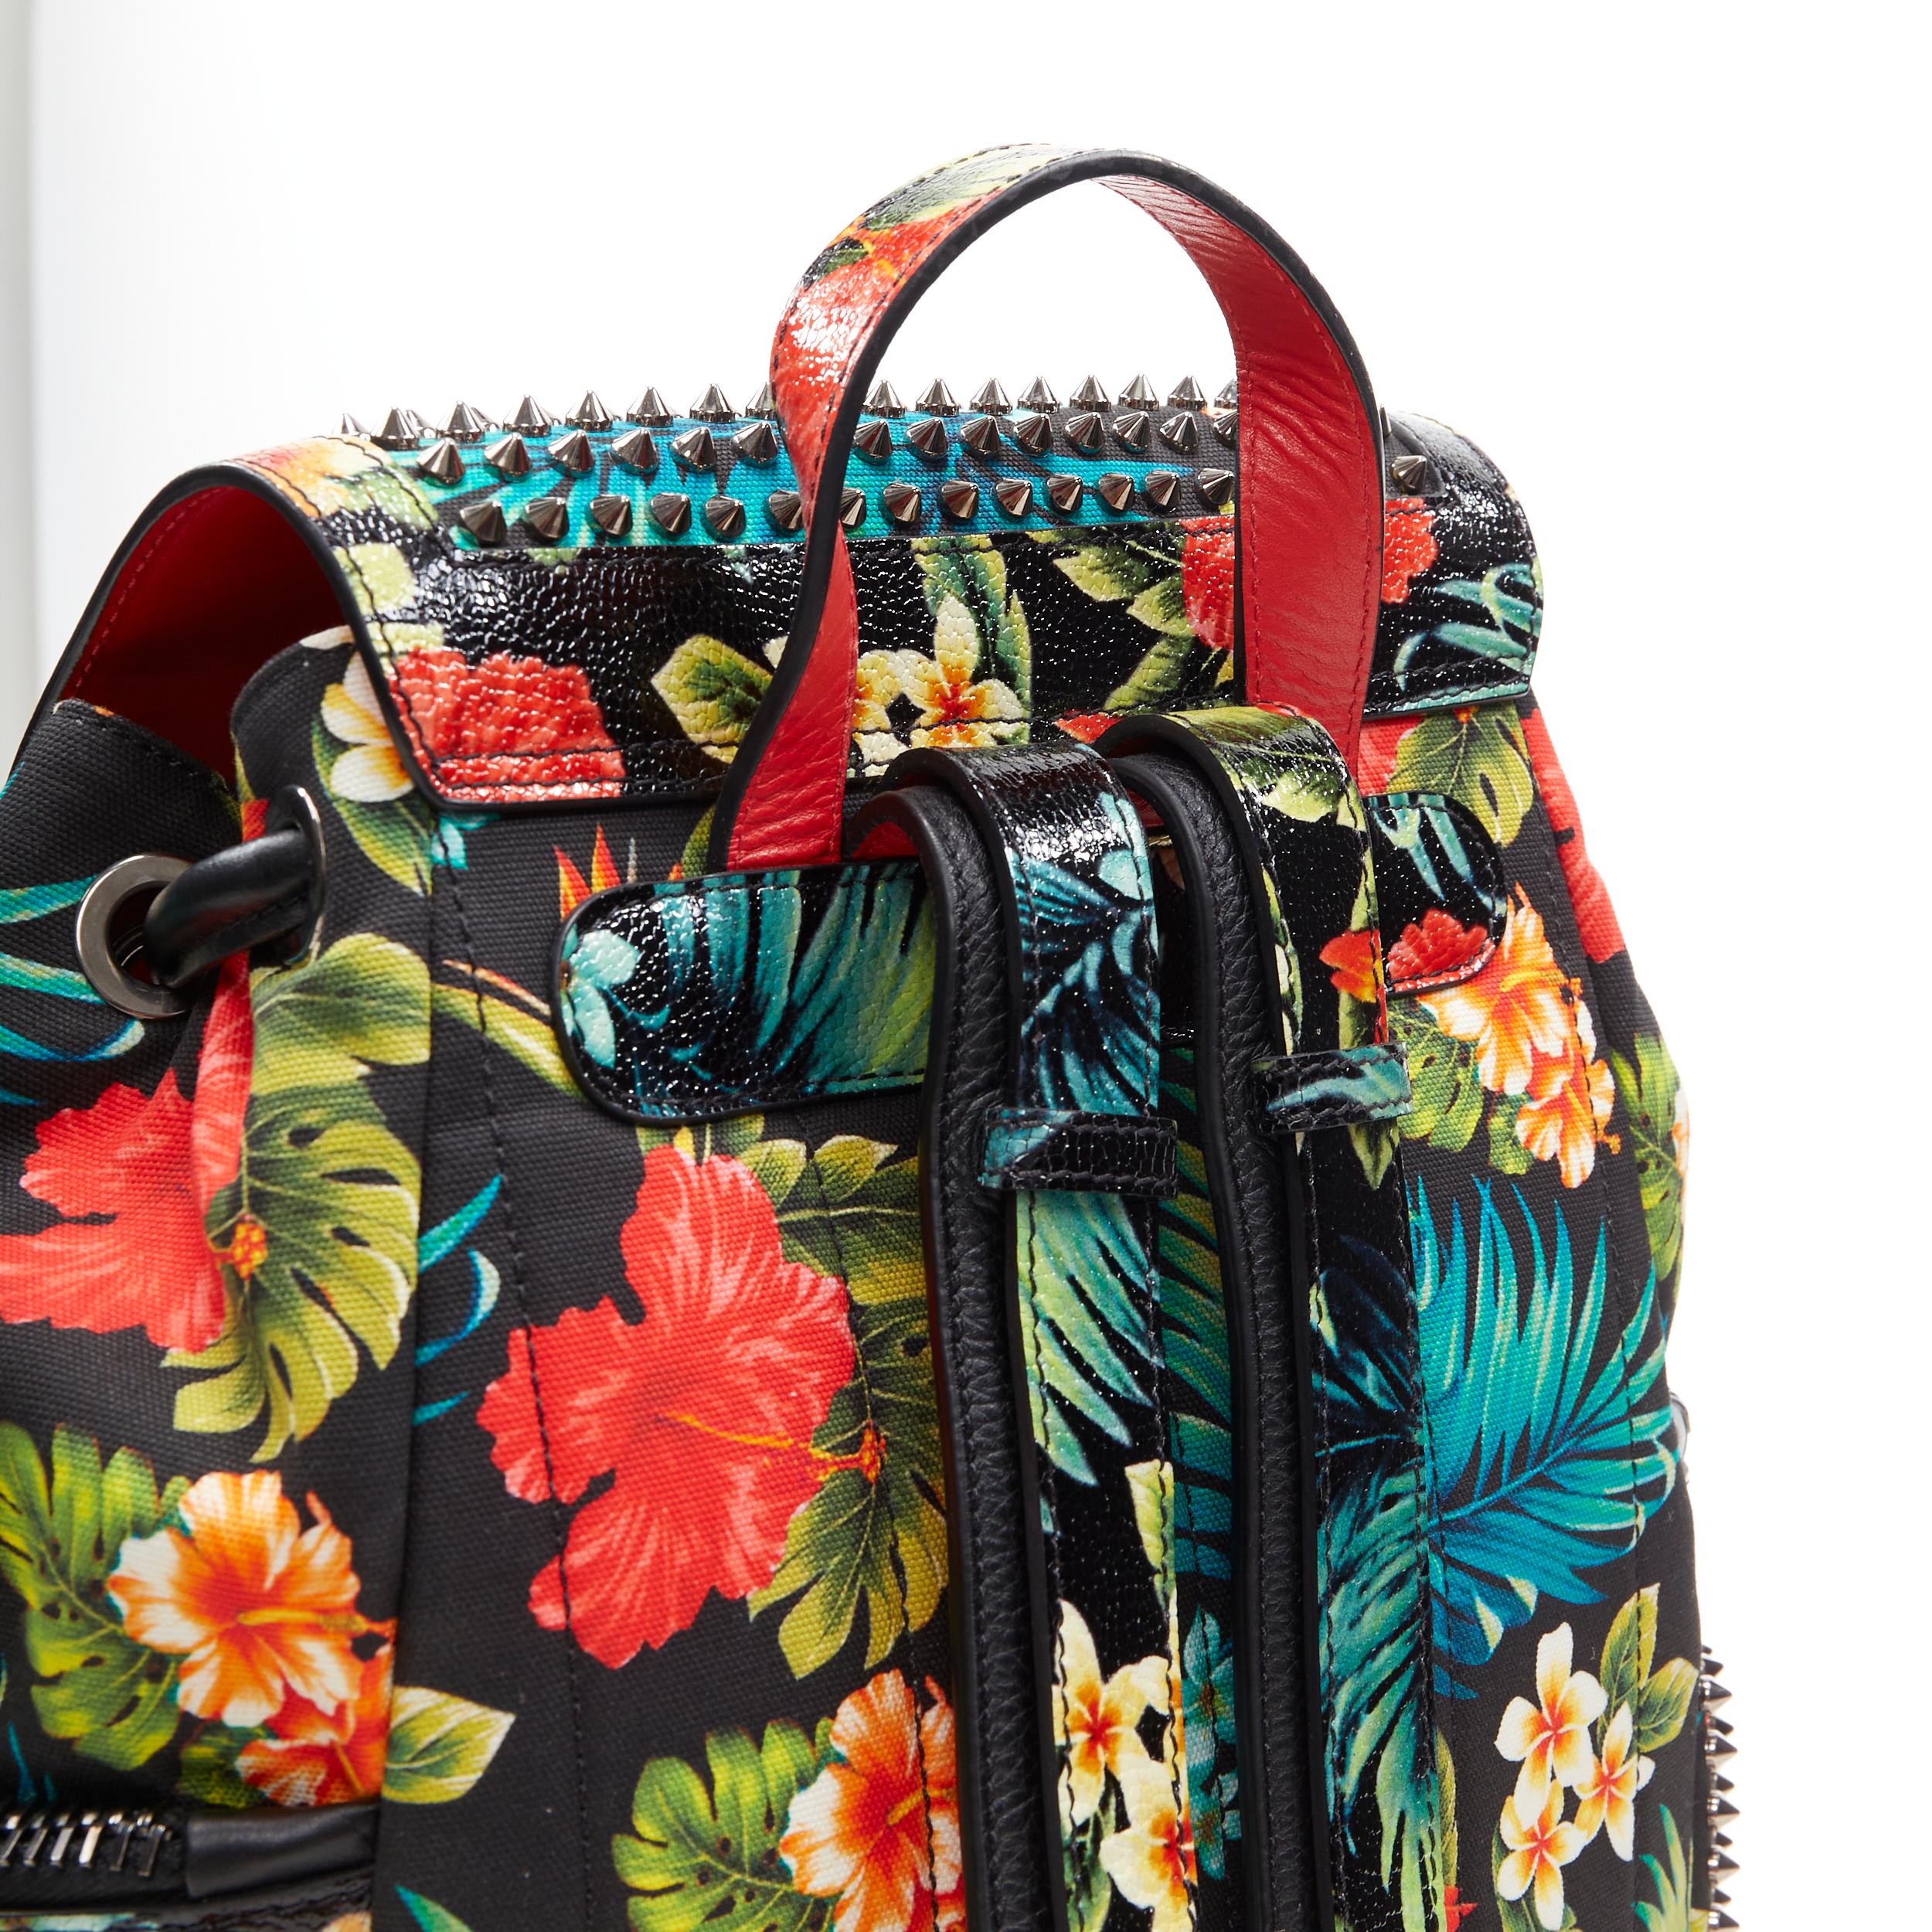 CHRISTIAN LOUBOUTIN Explorafunk tropical floral canvas spike stud backpack bag 2